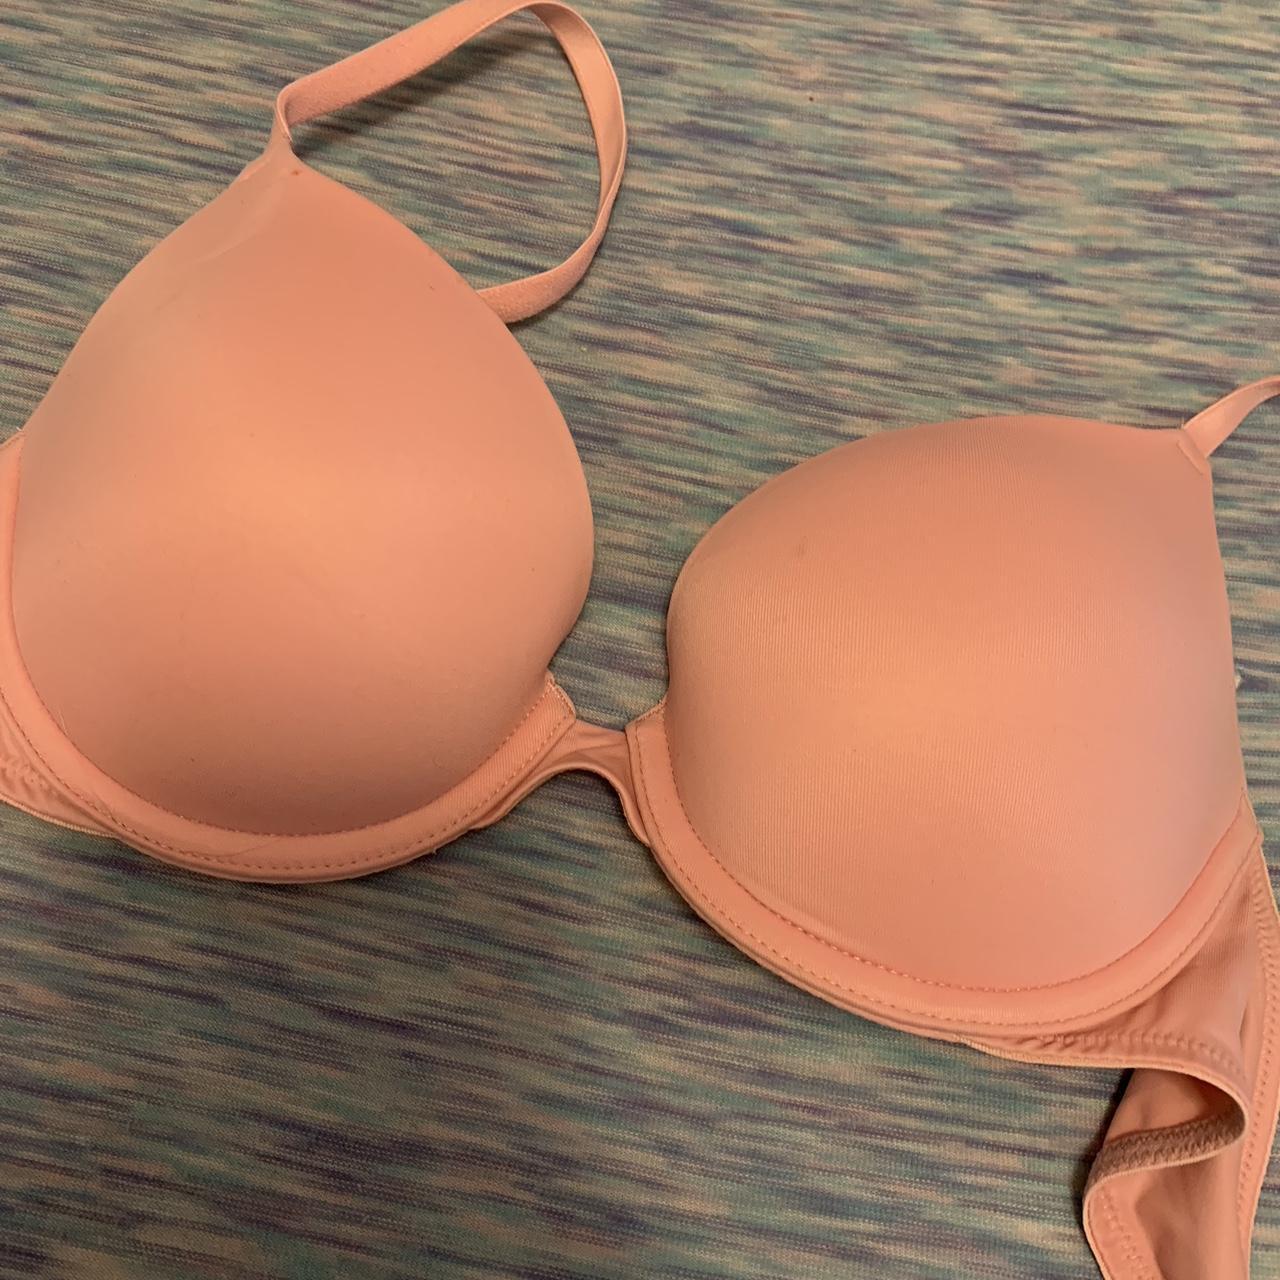 Victoria’s Secret Pink bra